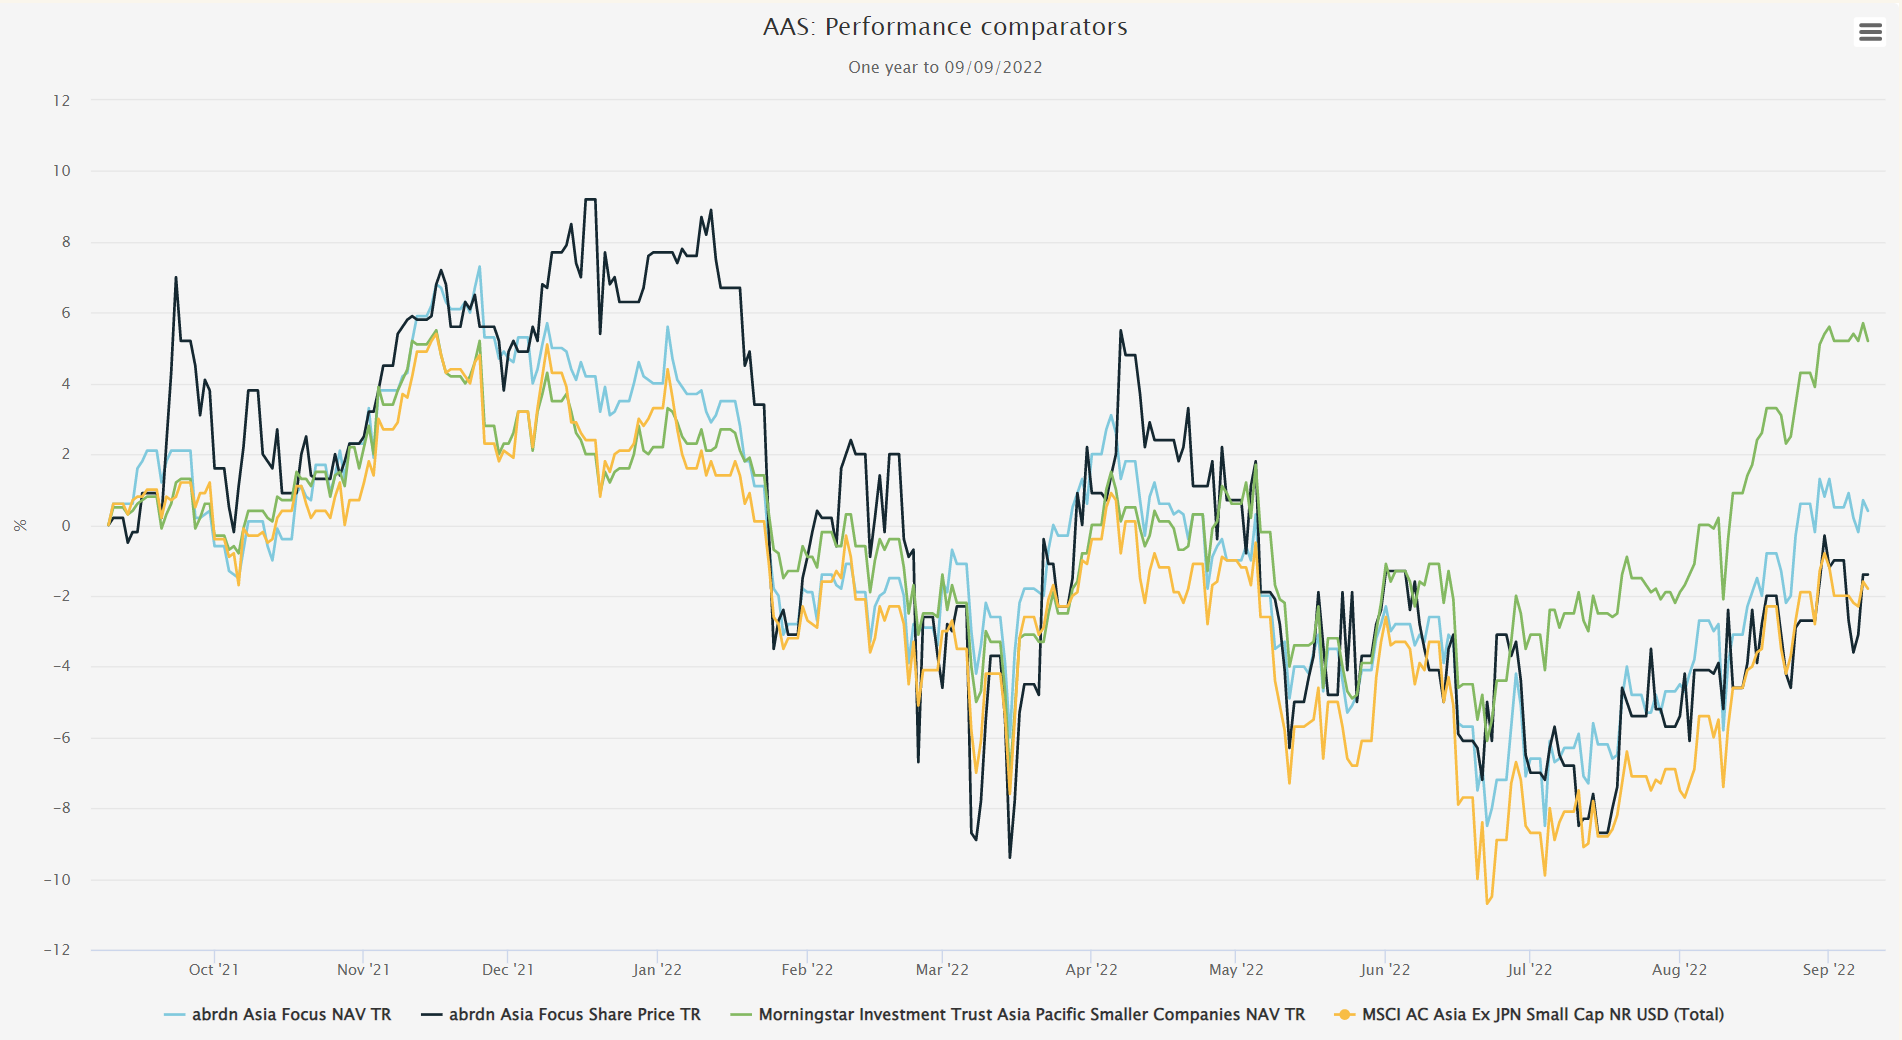 AAS Performance comparators